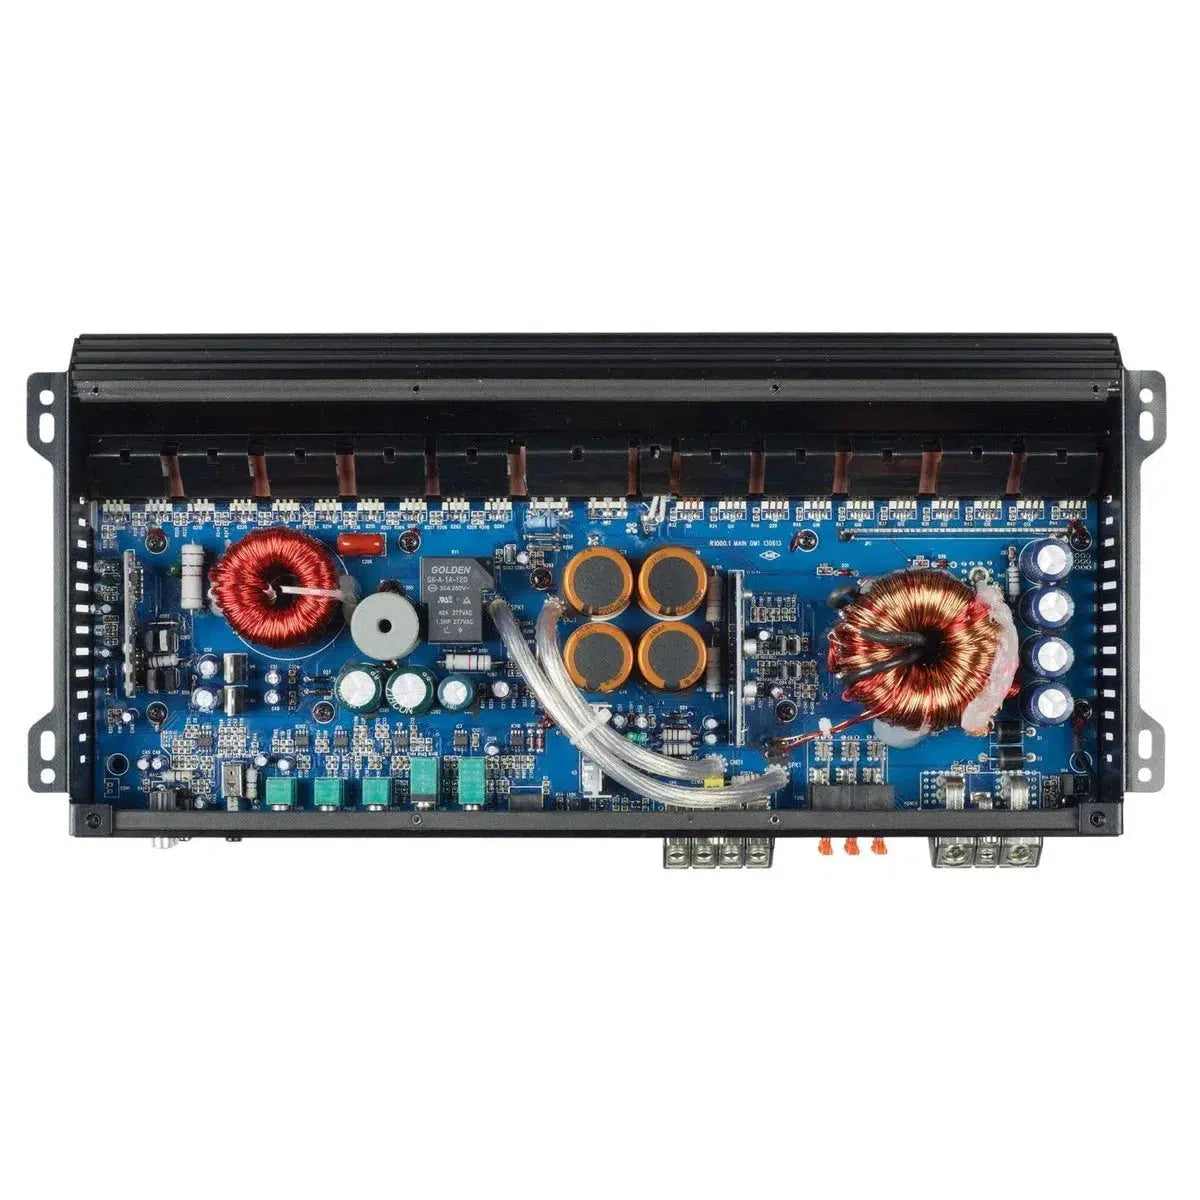 Sistema de audio-R-1250.1 Amplificador de 1 canal D-Masori.de